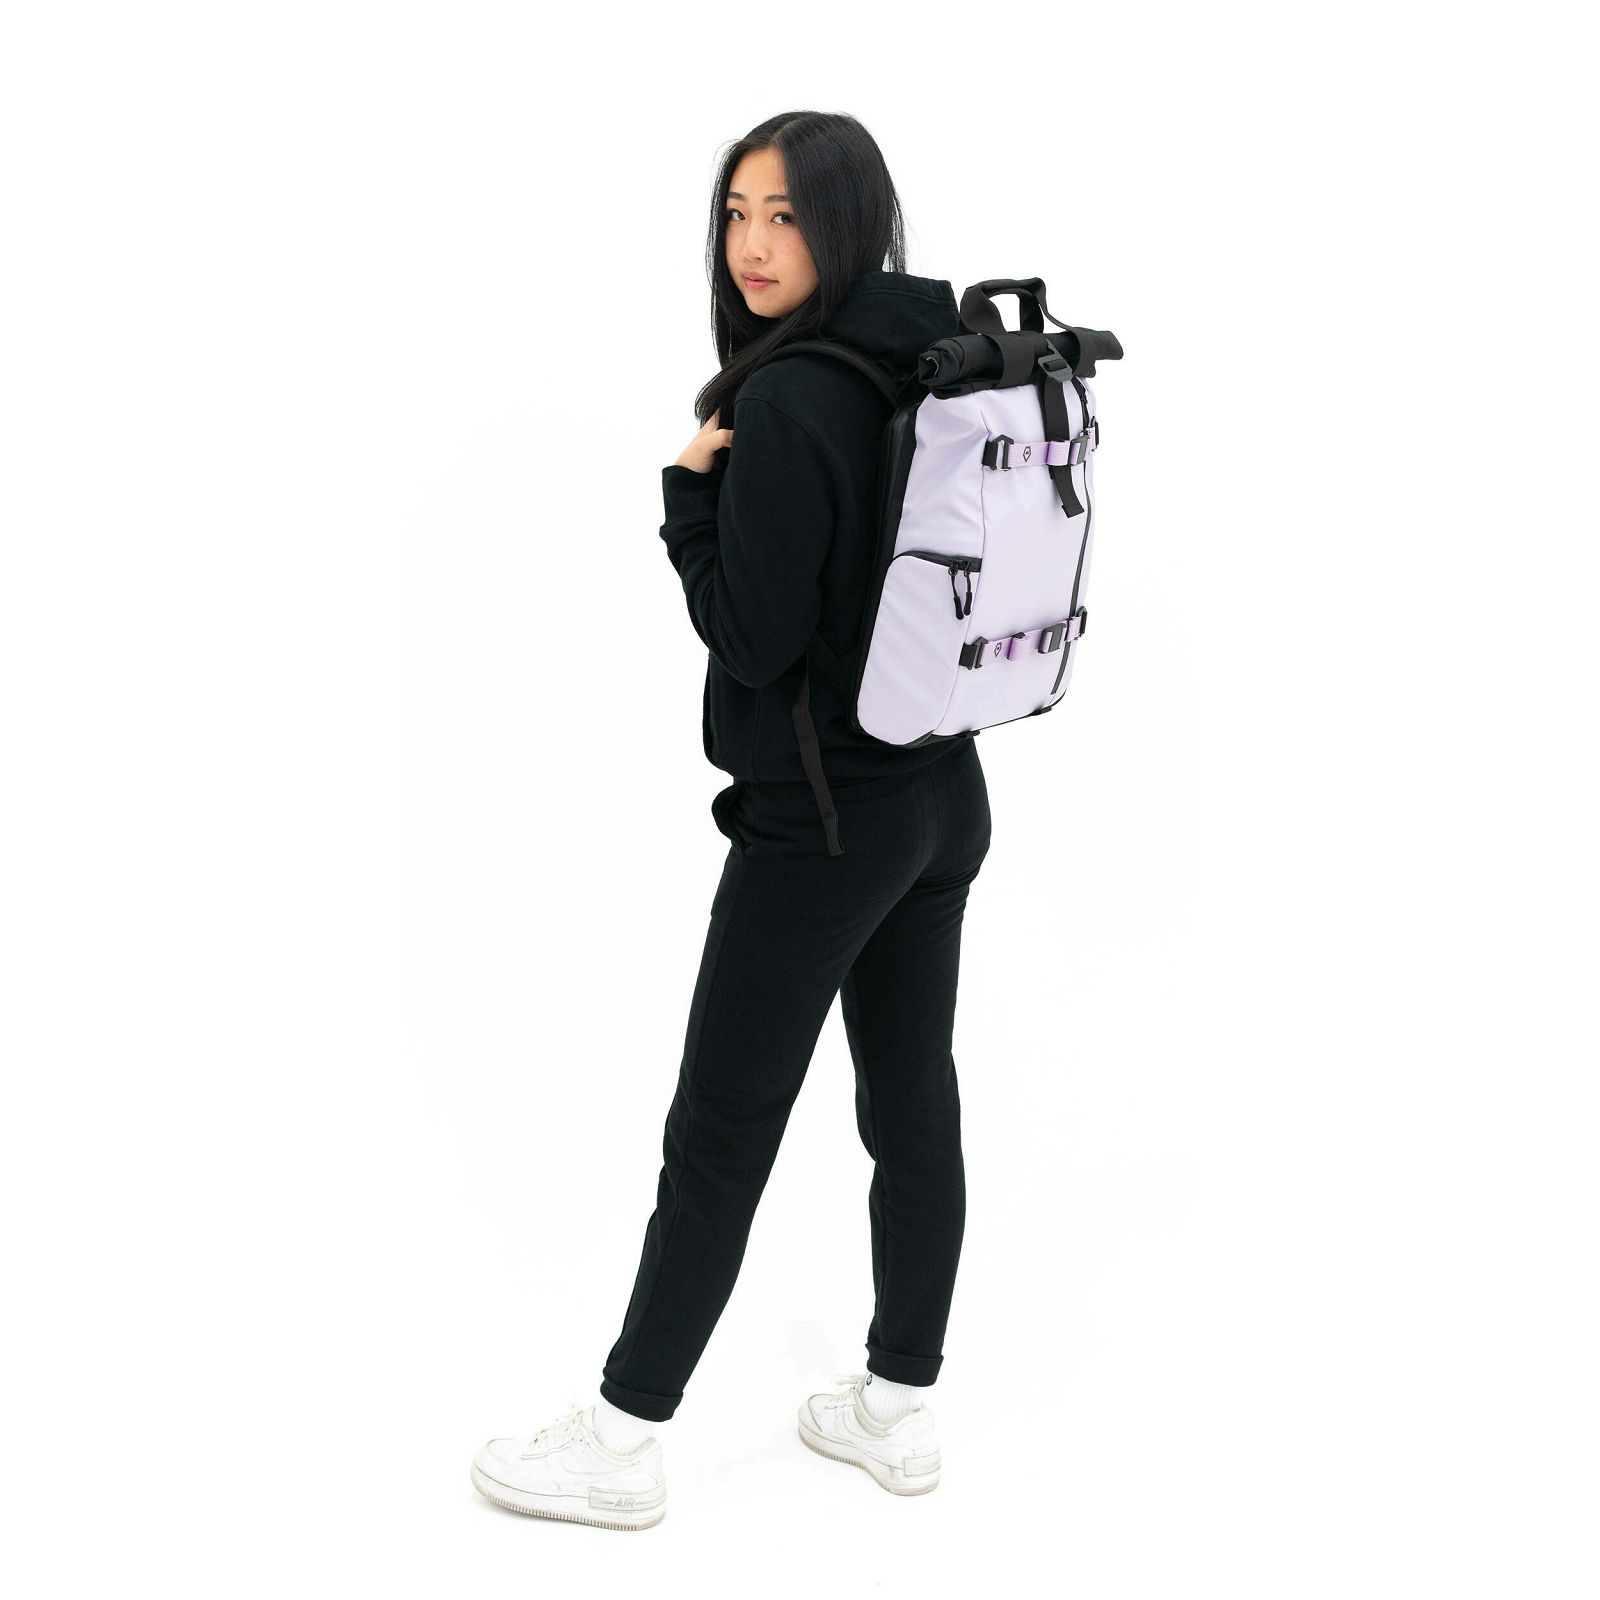 Wandrd Prvke 11L Lite V3 Uyuni Purple Backpack ruksak za foto opremu (PKLT-UP-3)